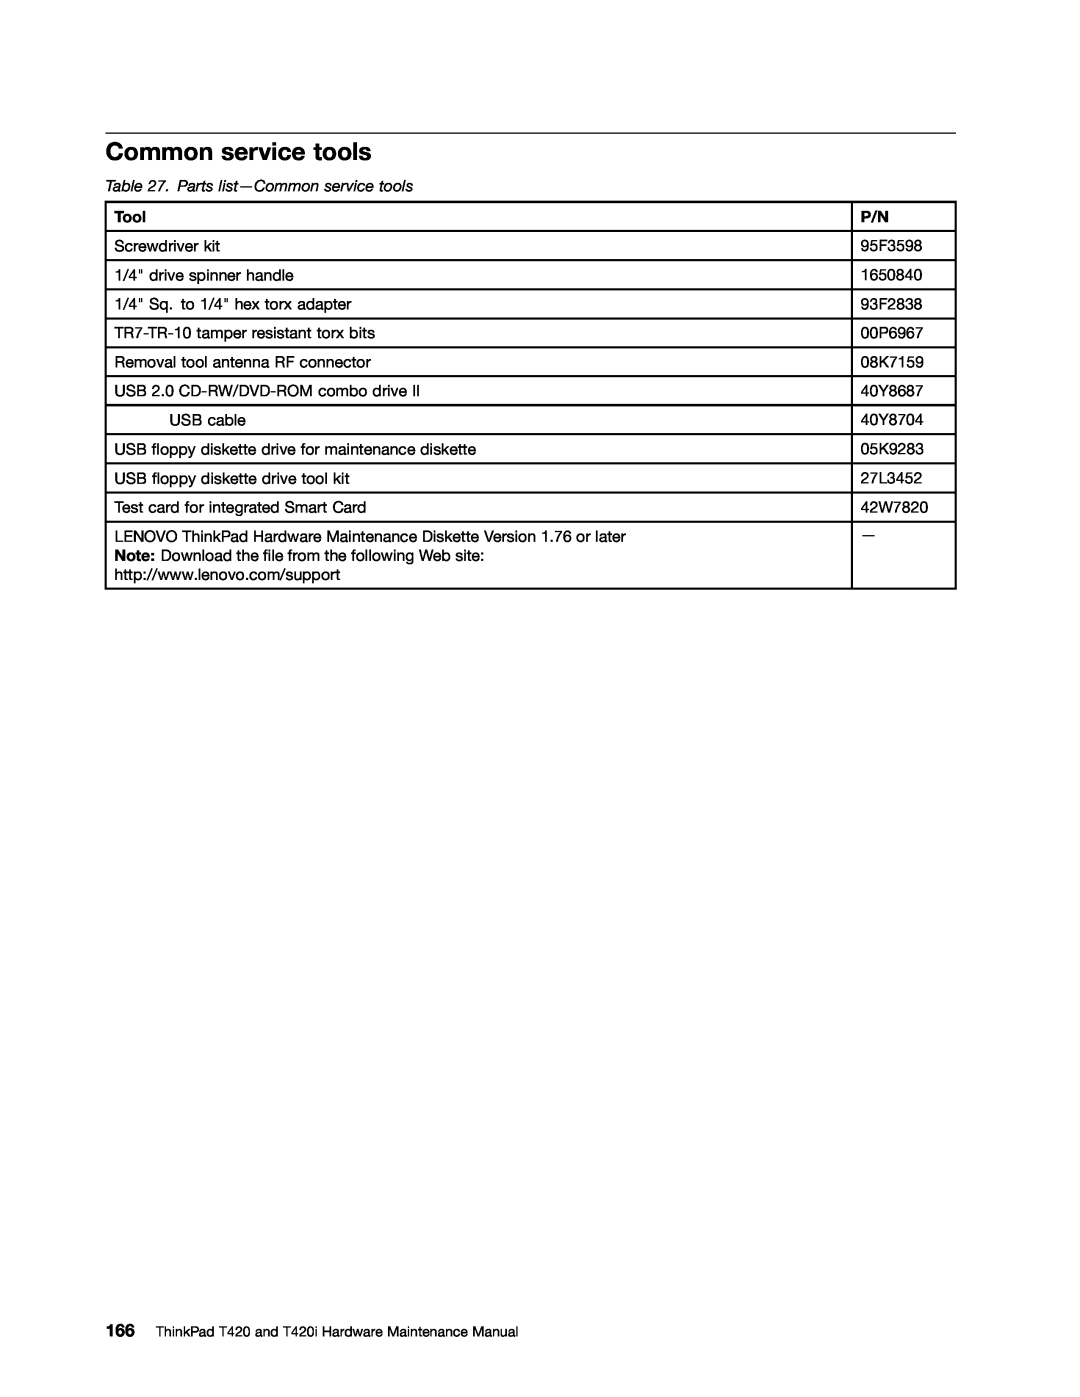 Lenovo T420i manual Parts list-Common service tools 